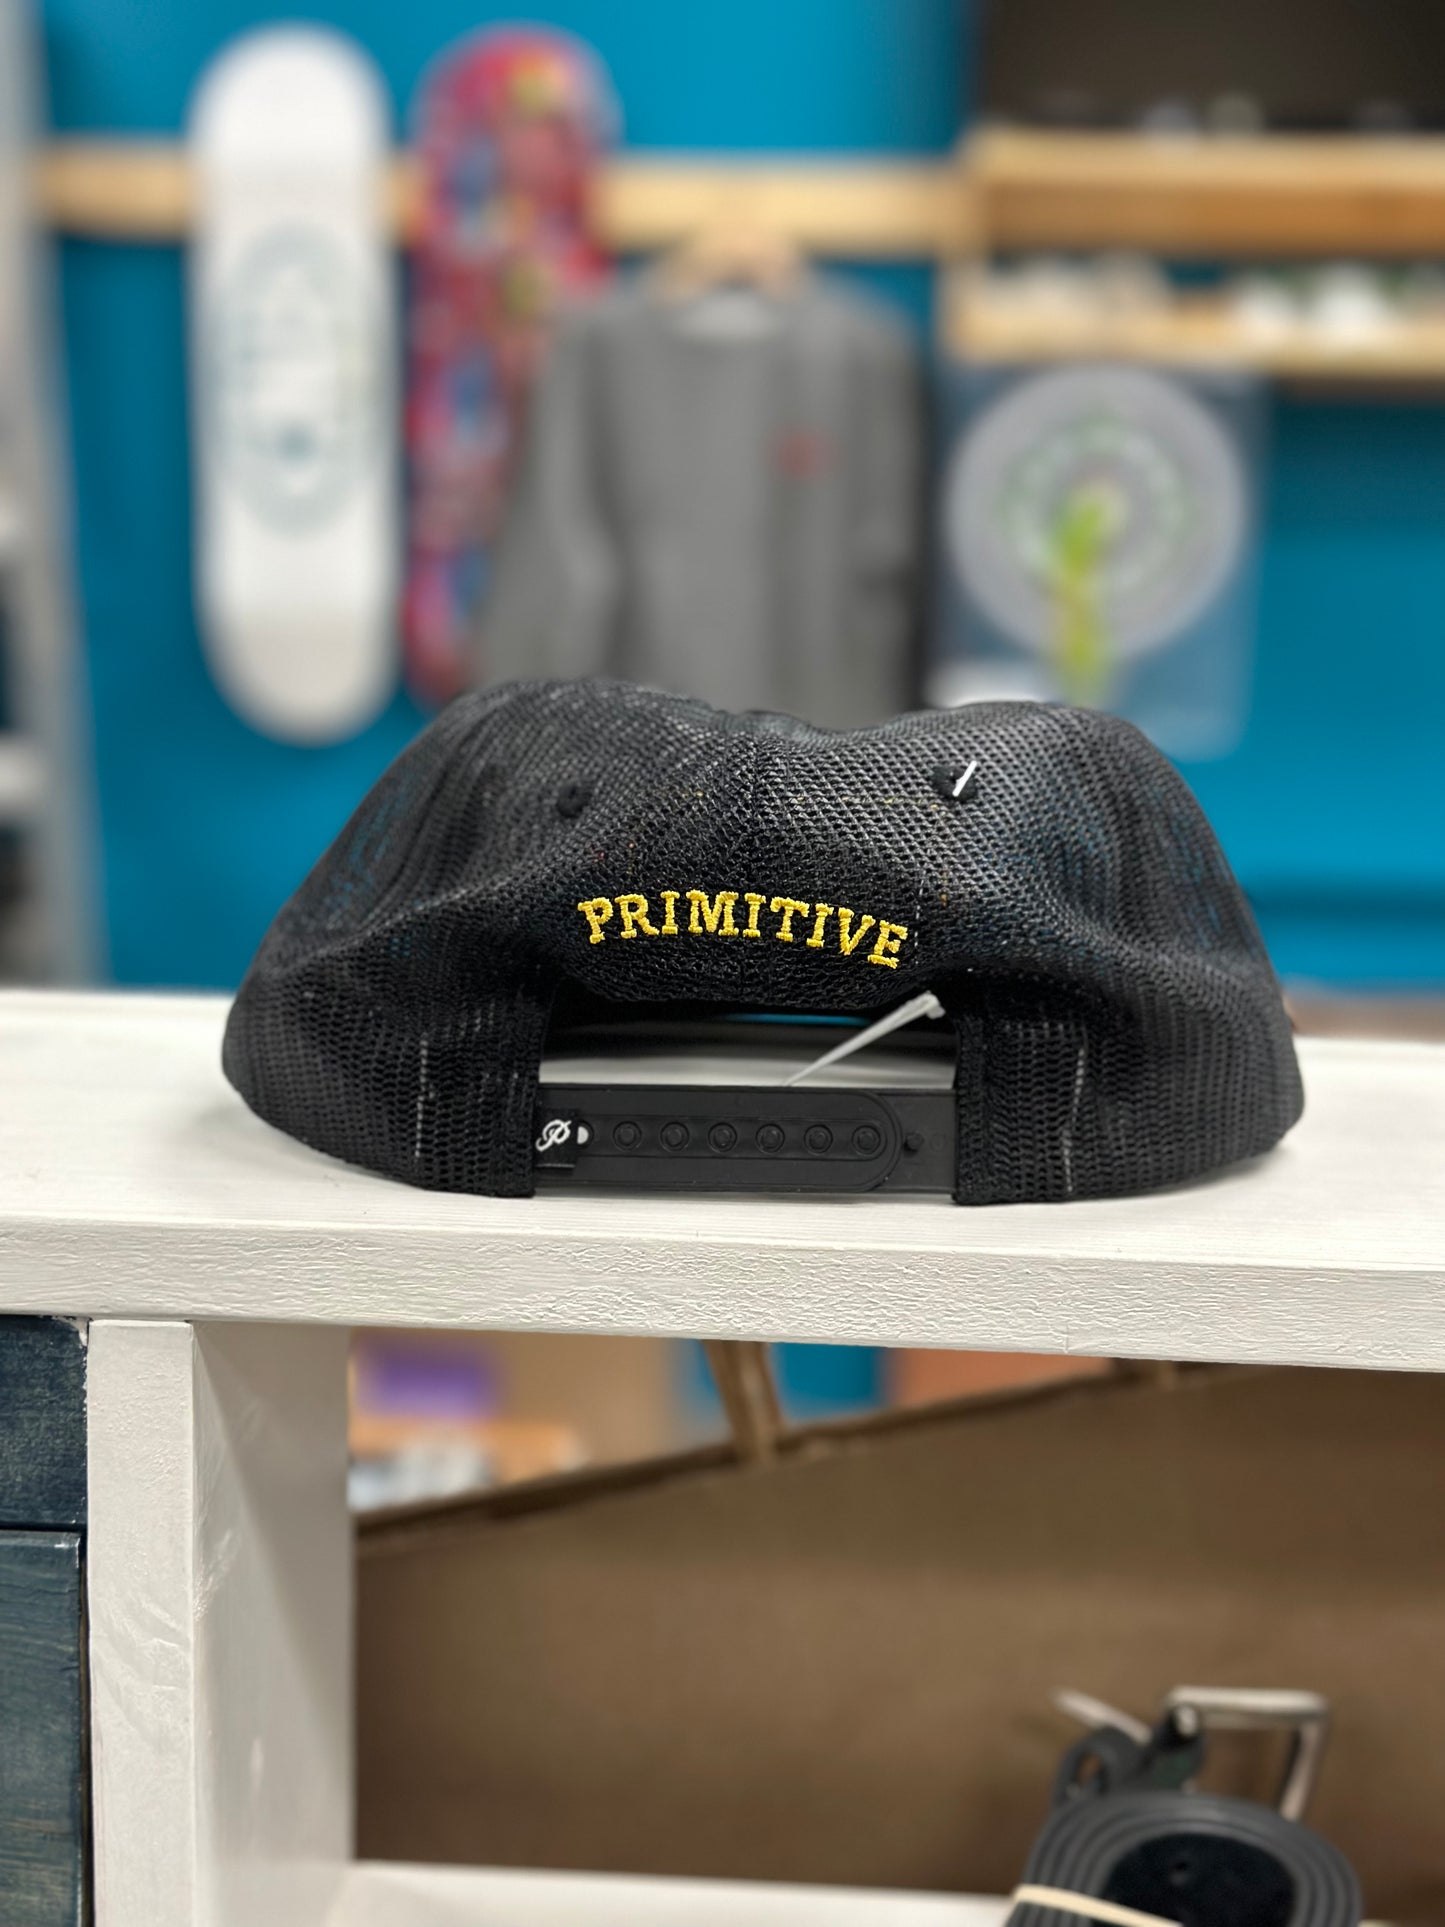 Primitive - Always Trippy Mesh Snapback Hat